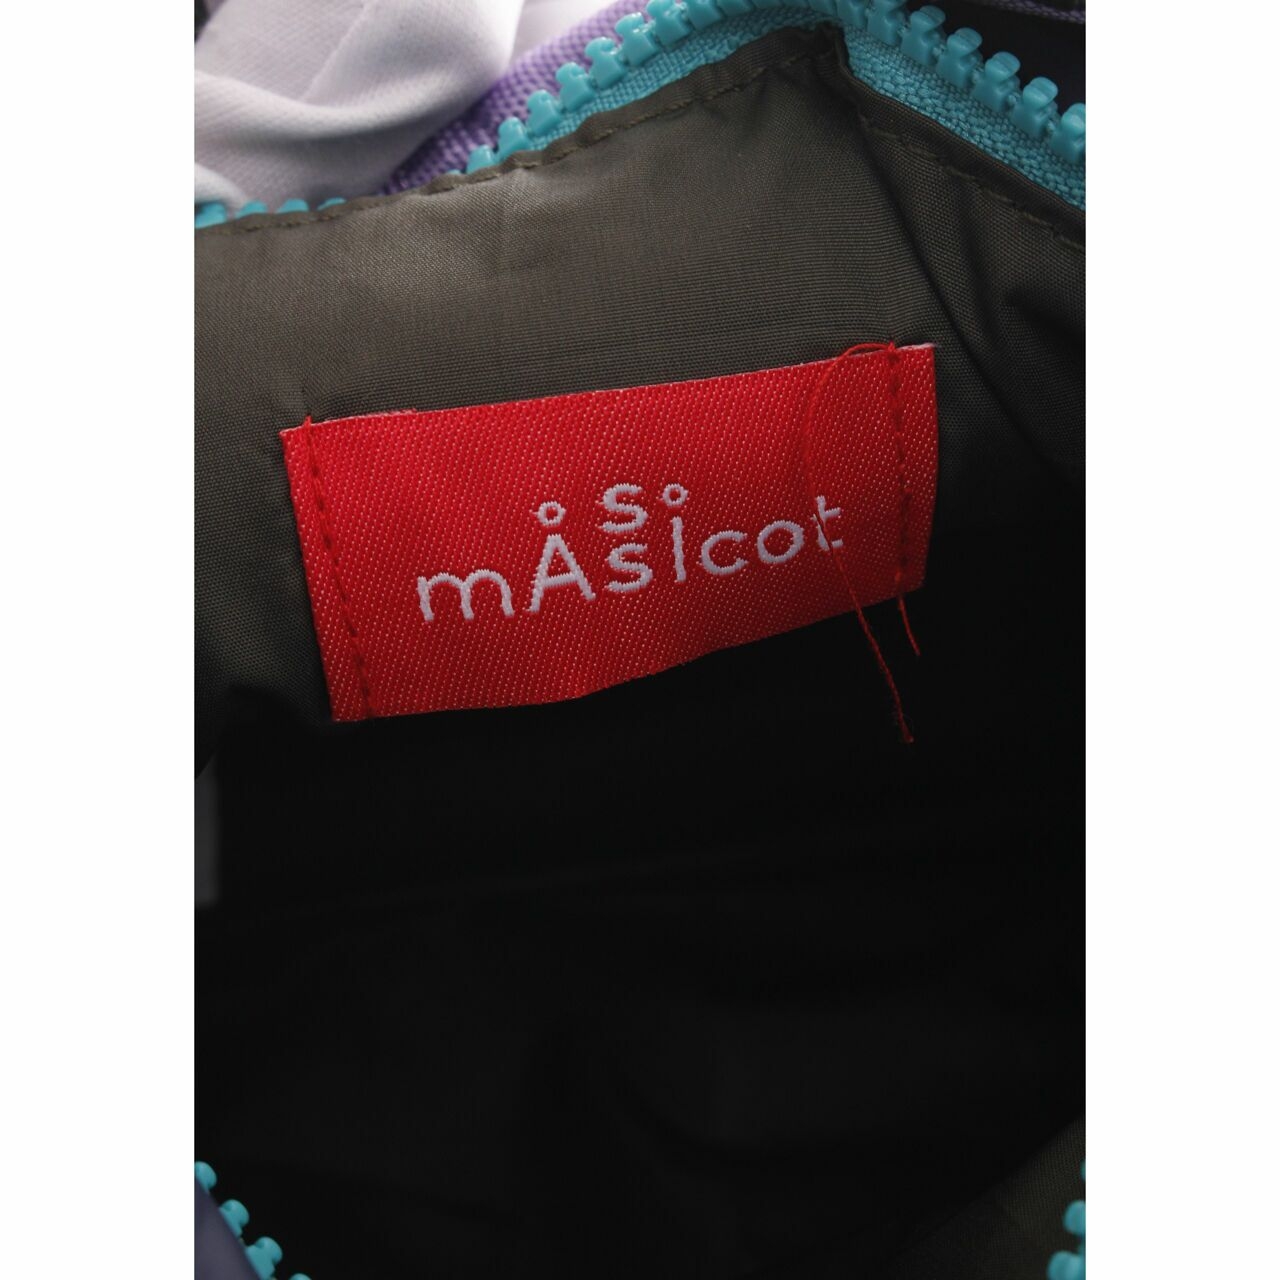 Massicot Multi Pattern Sling Bag